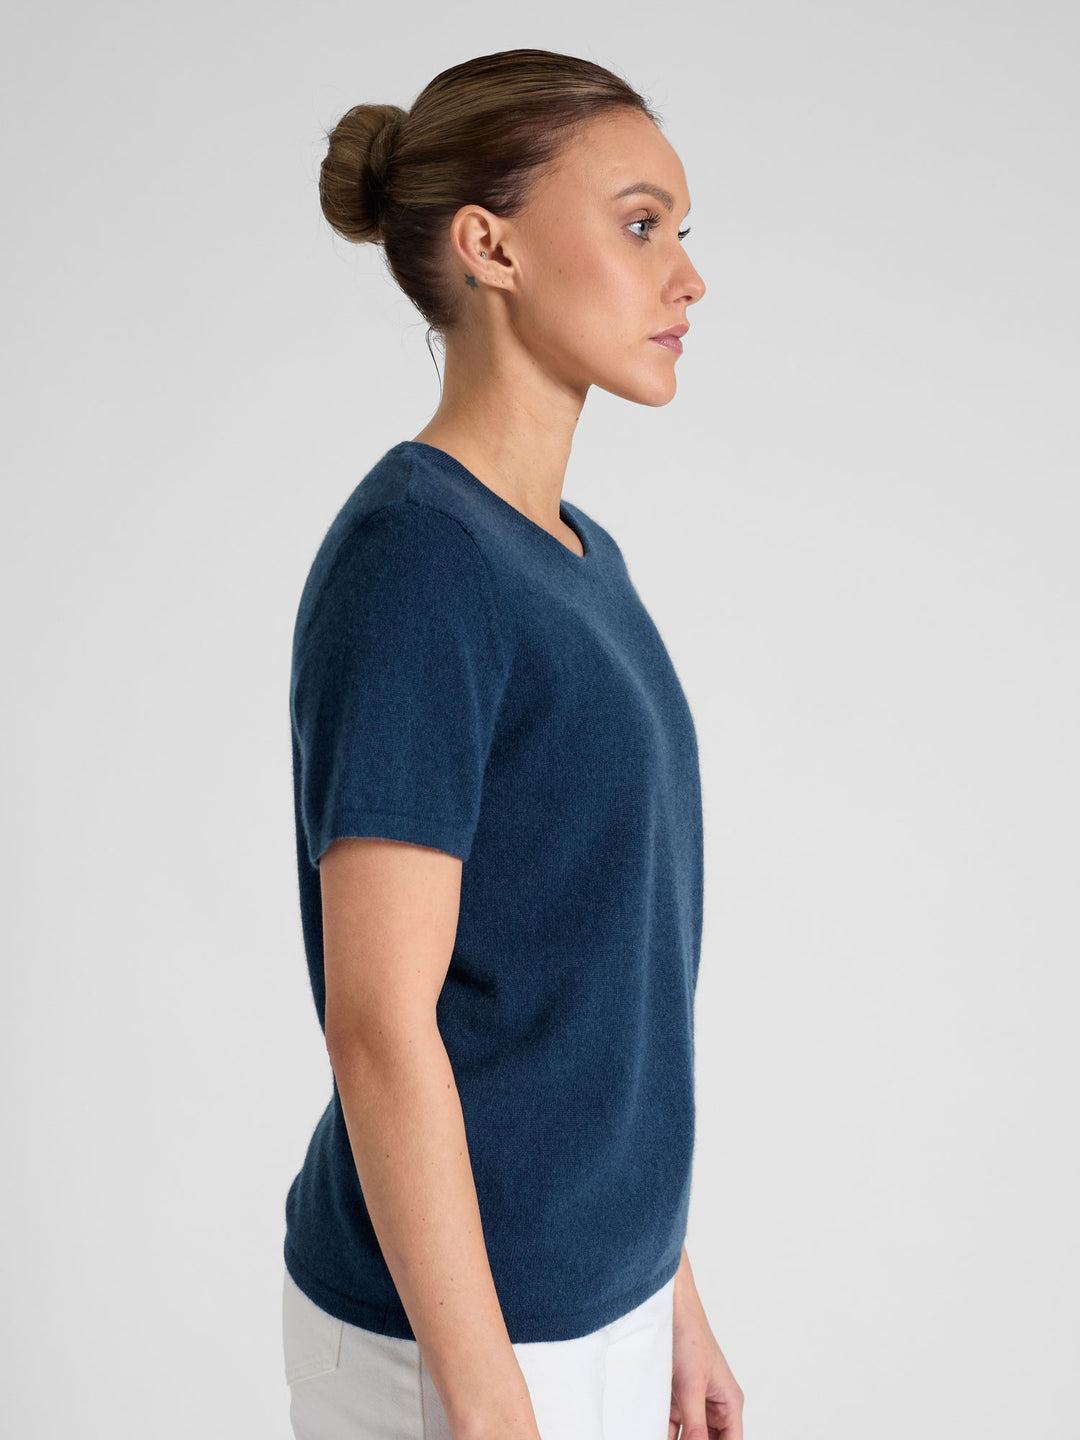 Cashmere t-shirt "fresh" in 100% pure cashmere. Scandinavian design by Kashmina. Color: Mountain Blue.